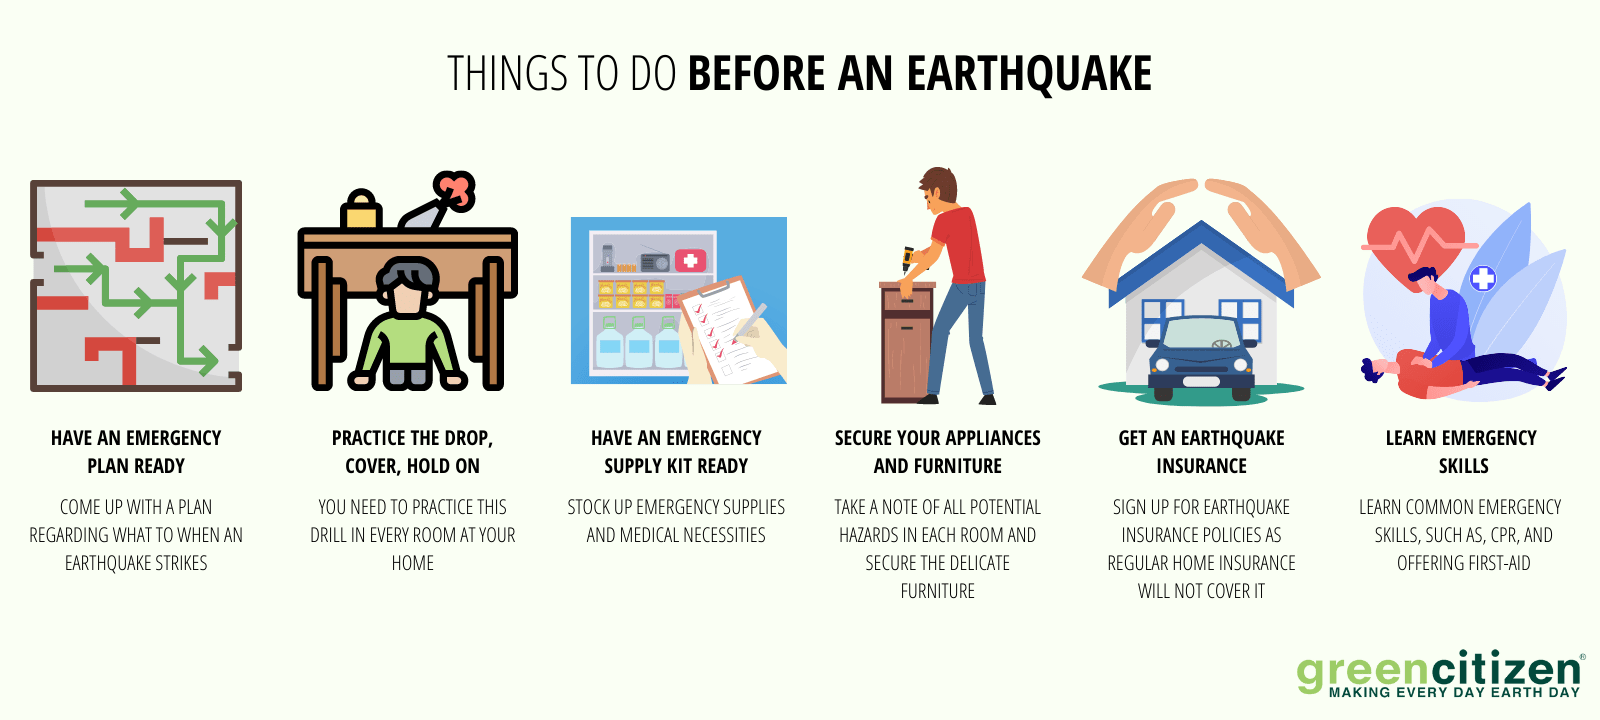 Earthquake safety preparation